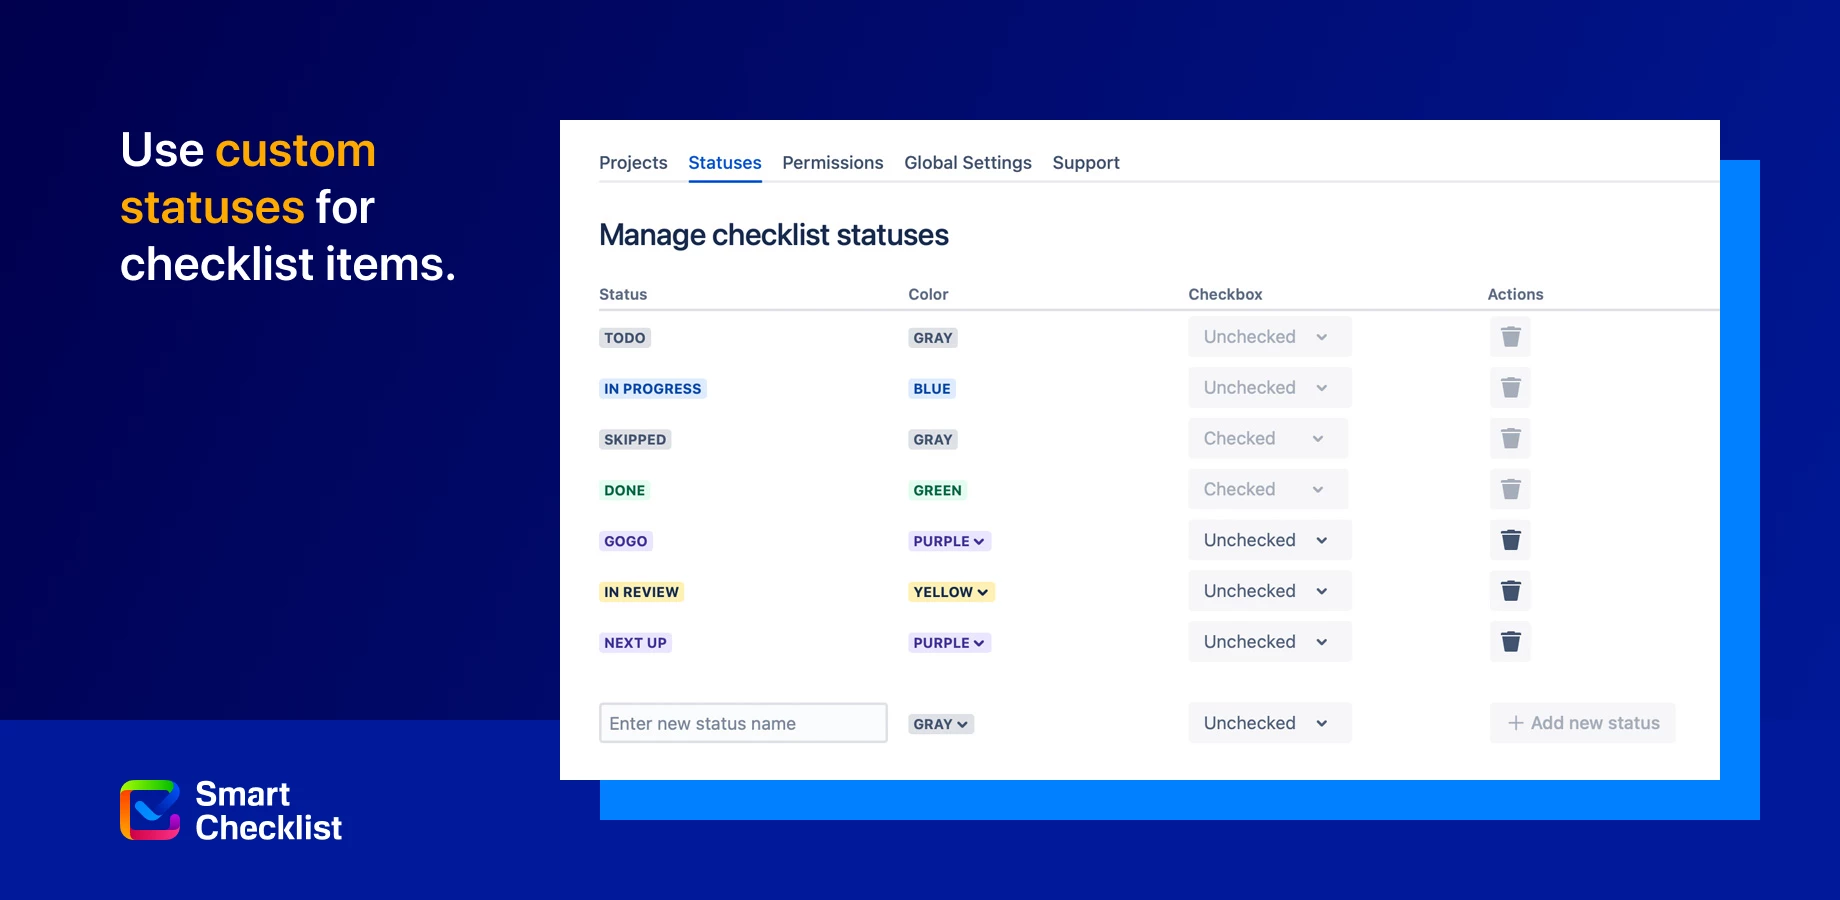 Use custom statuses for checklist items